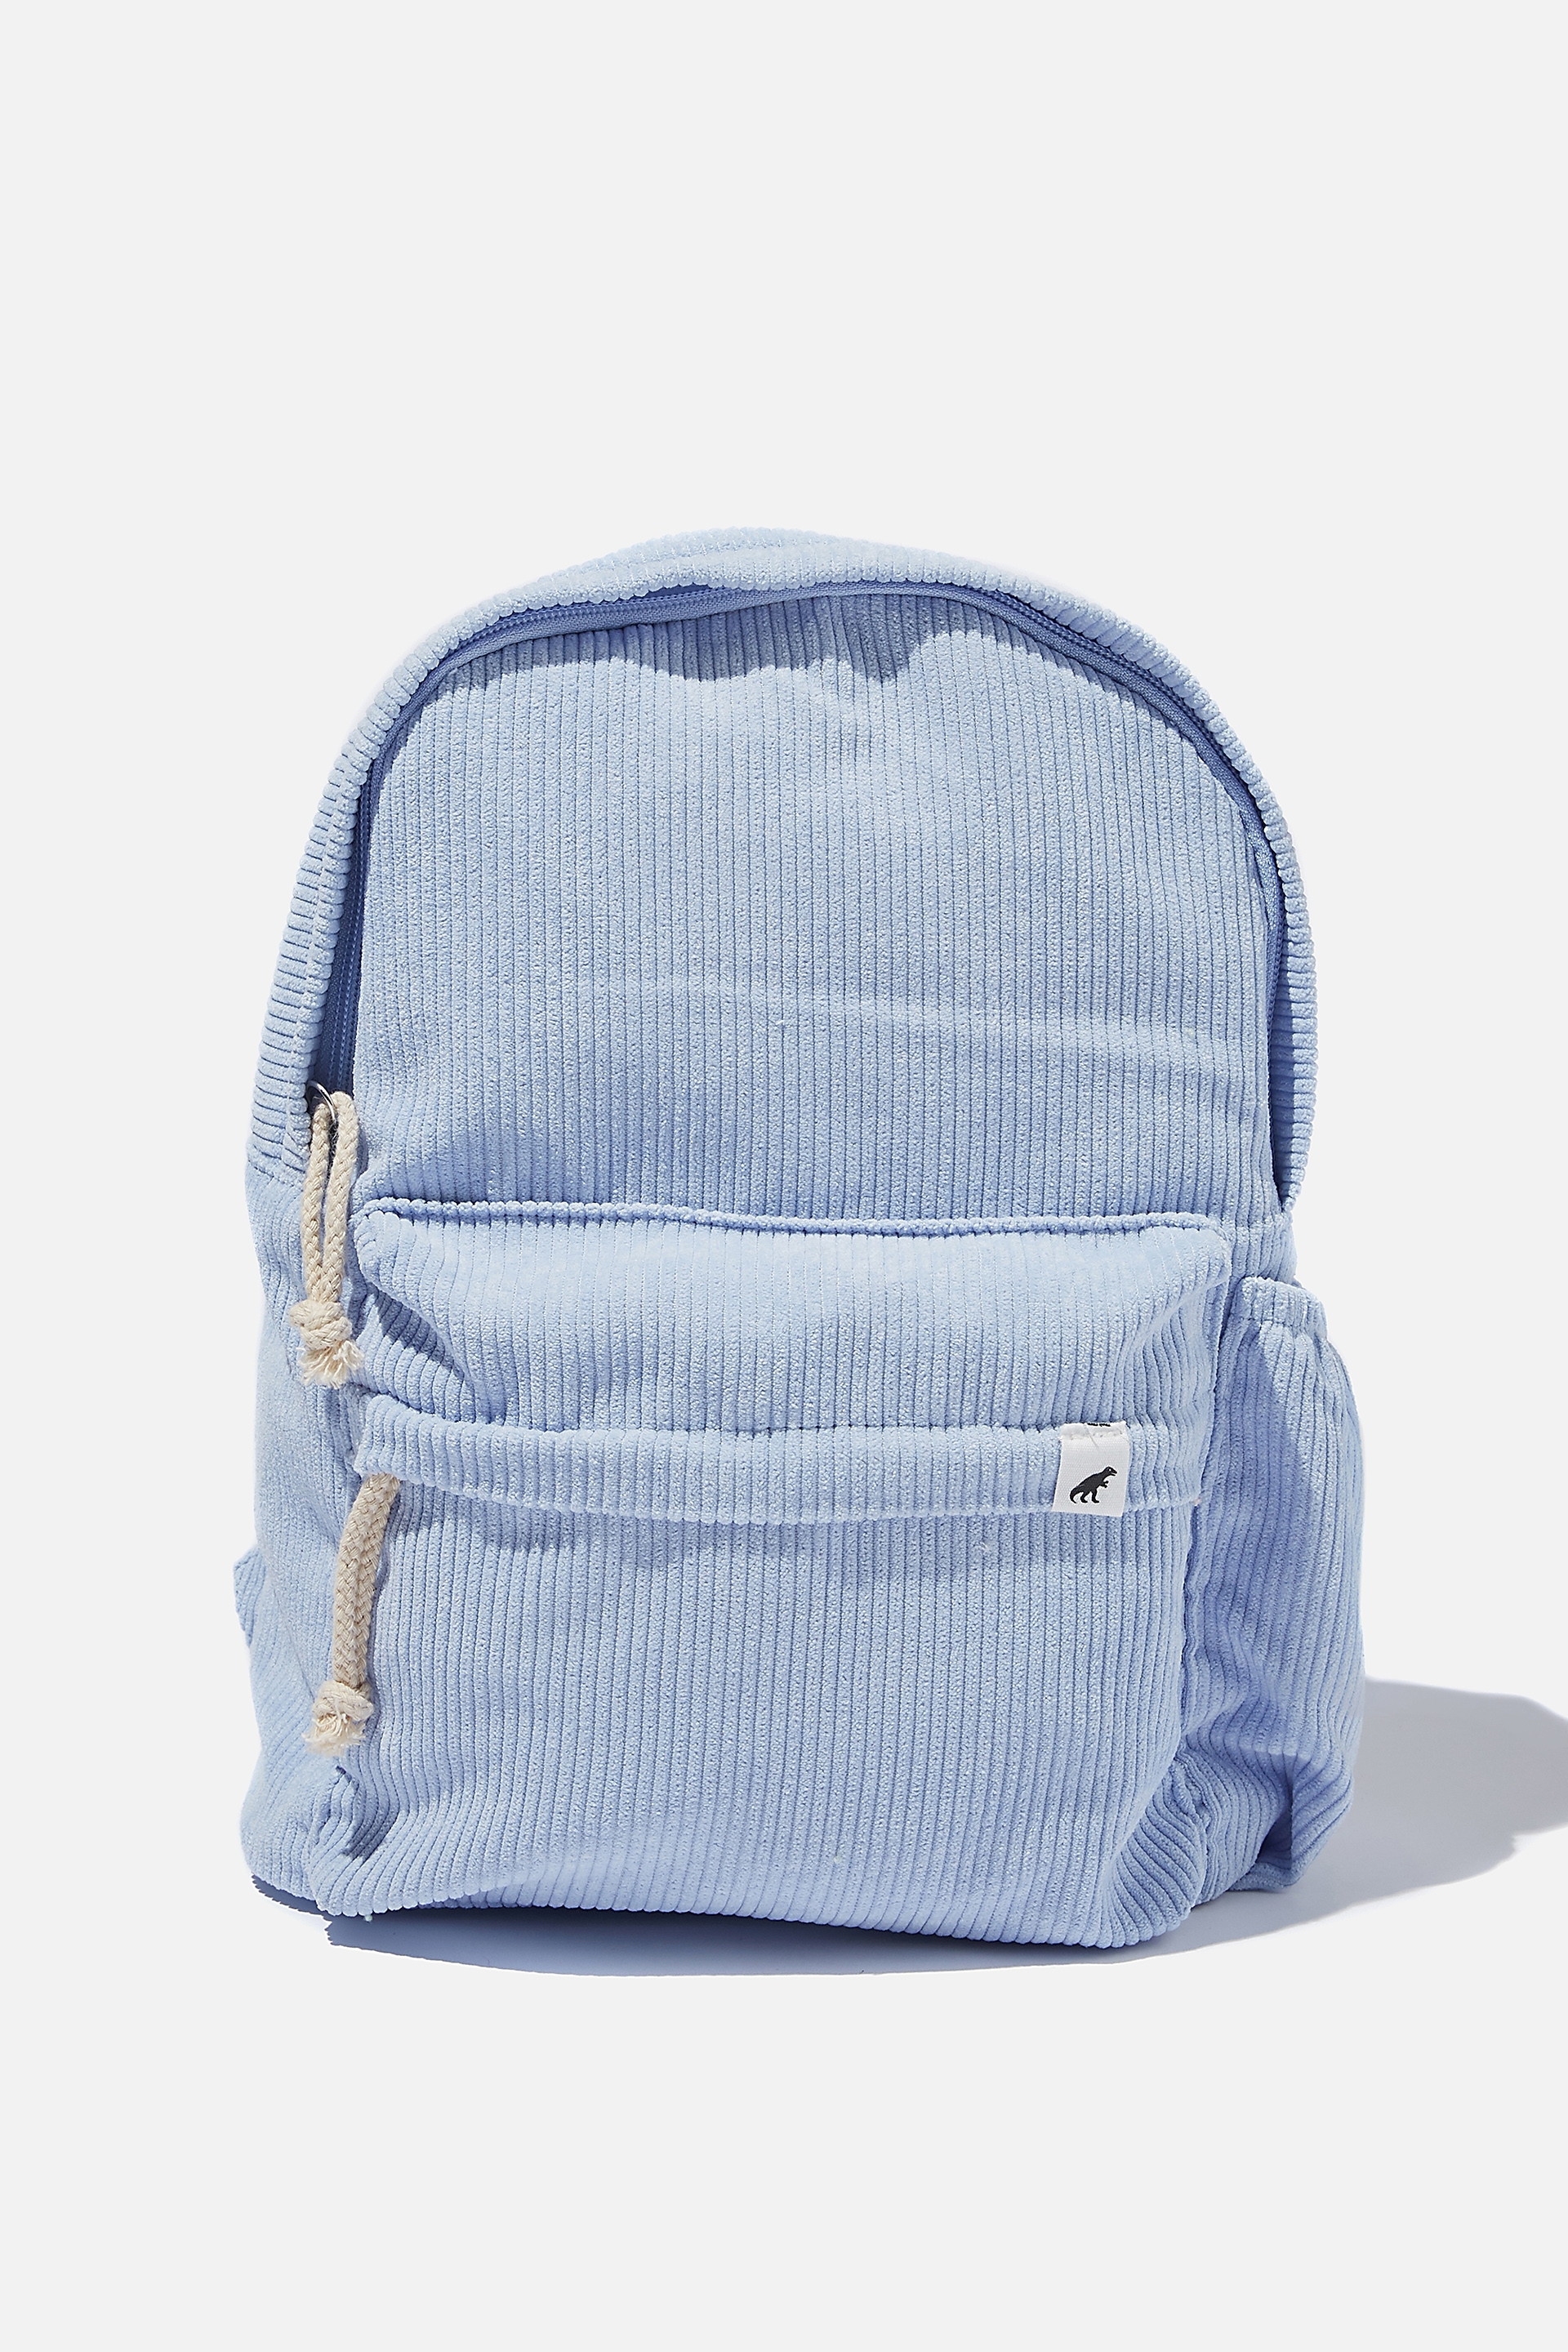 Cotton On Kids - Back To School Cord Backpack - Sky haze